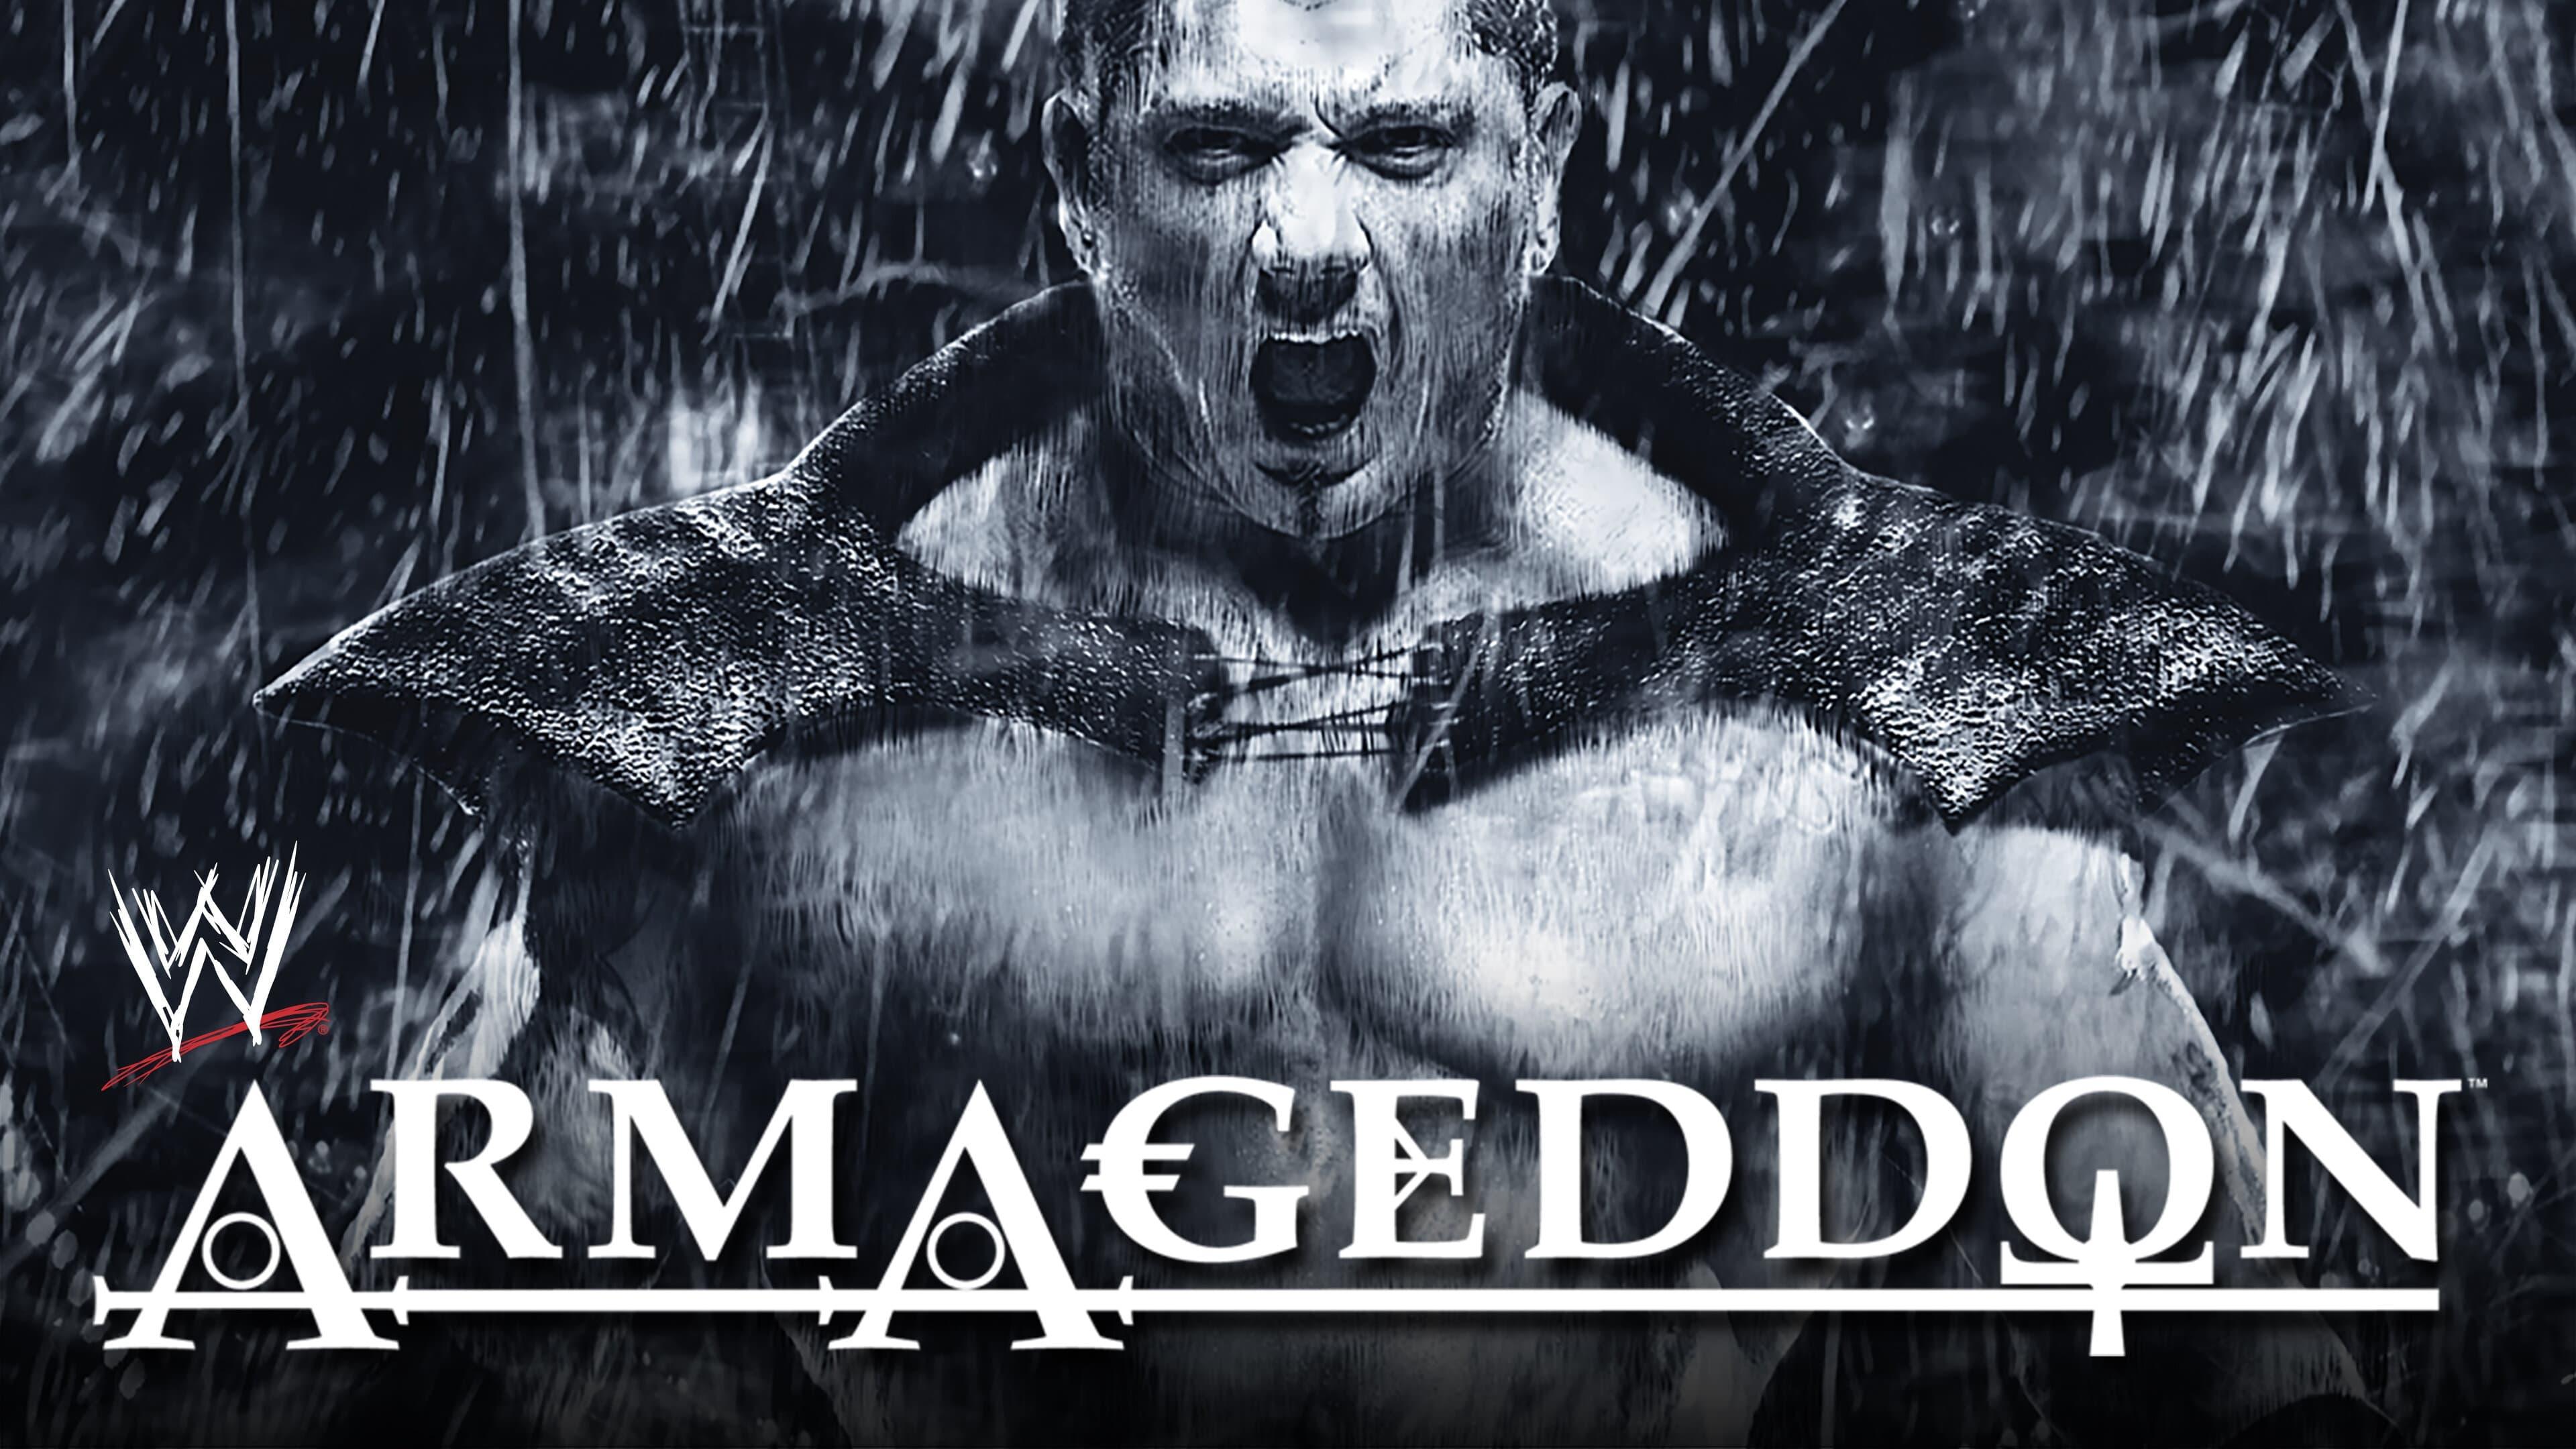 WWE Armageddon 2006 backdrop